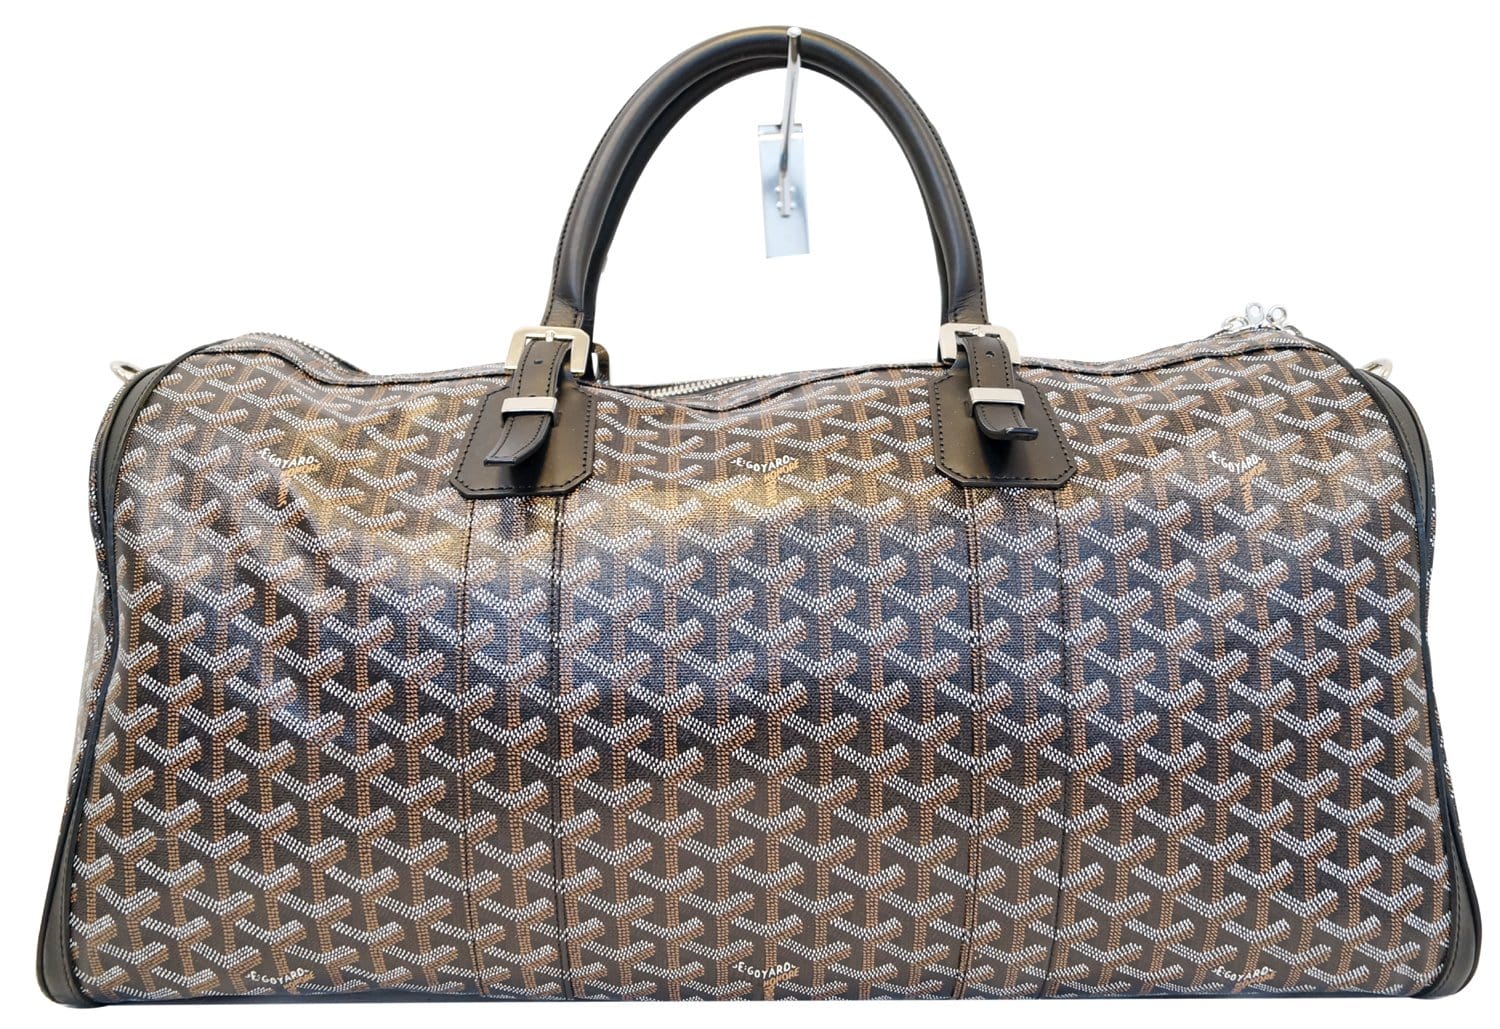 Goyard Travel 55 - 2 For Sale on 1stDibs  goyard travel bag, goyard travel  55 bag price, goyard boeing 55 bag price